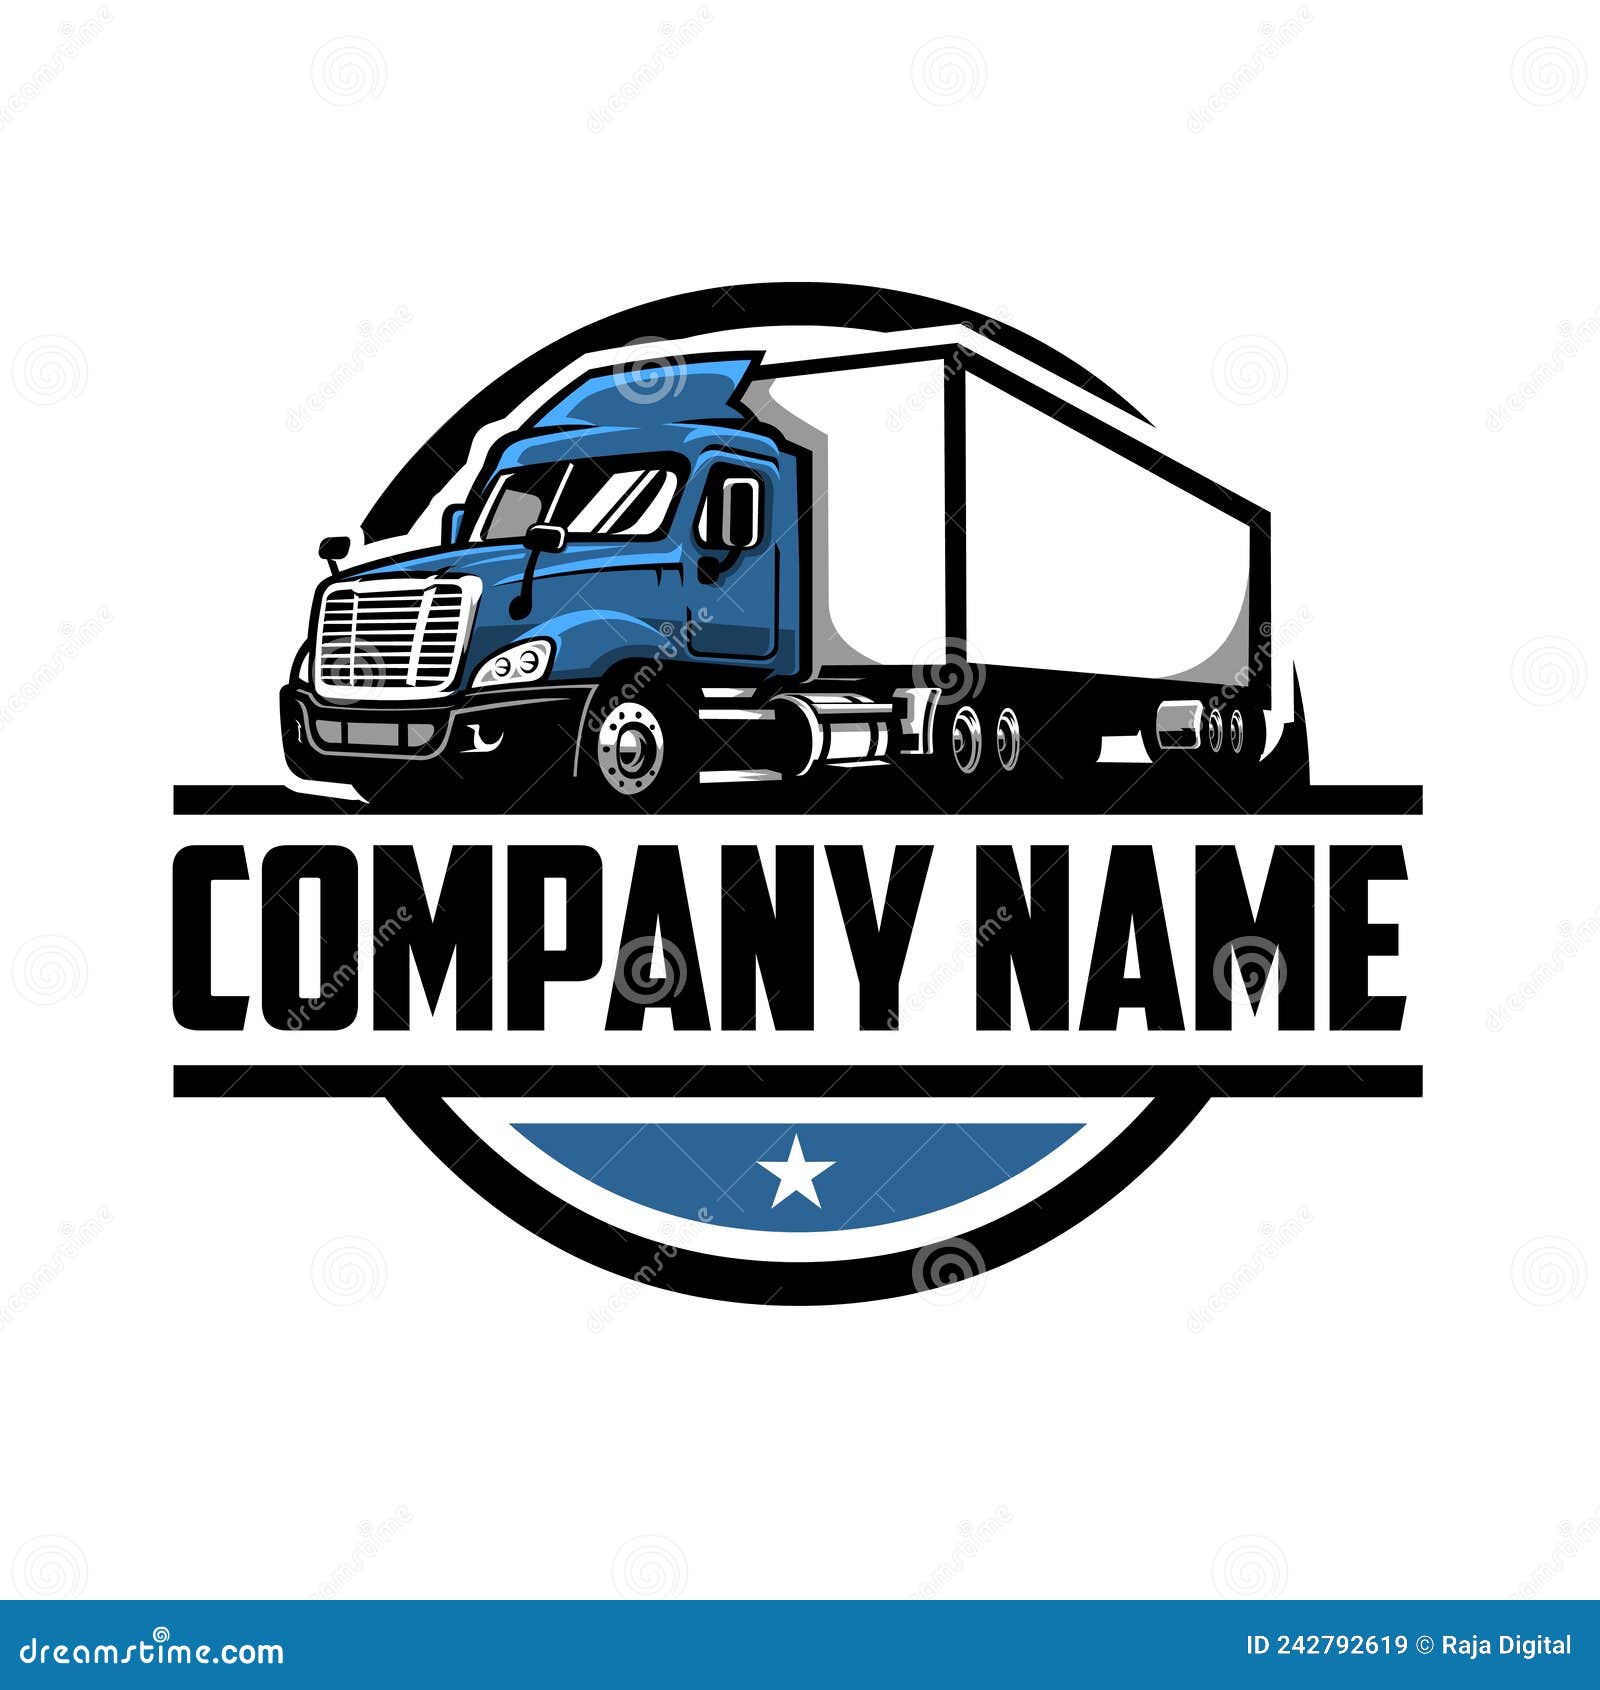 trucking company ready made logo. 18 wheeler semi truck logo 